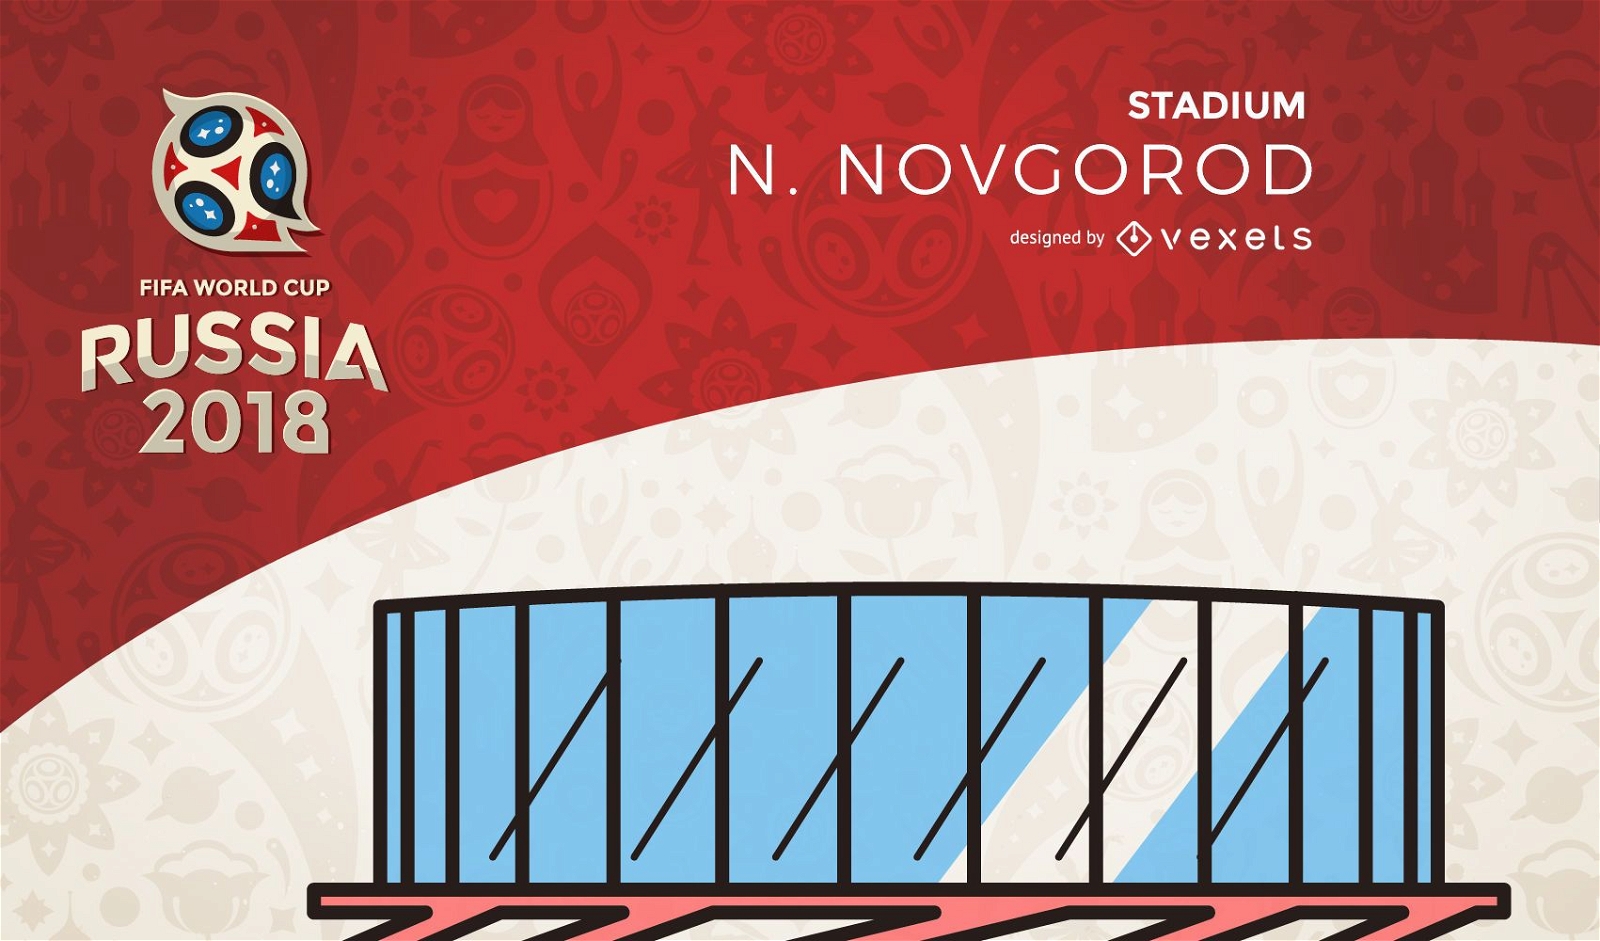 Russia 2018 Novgorod stadium